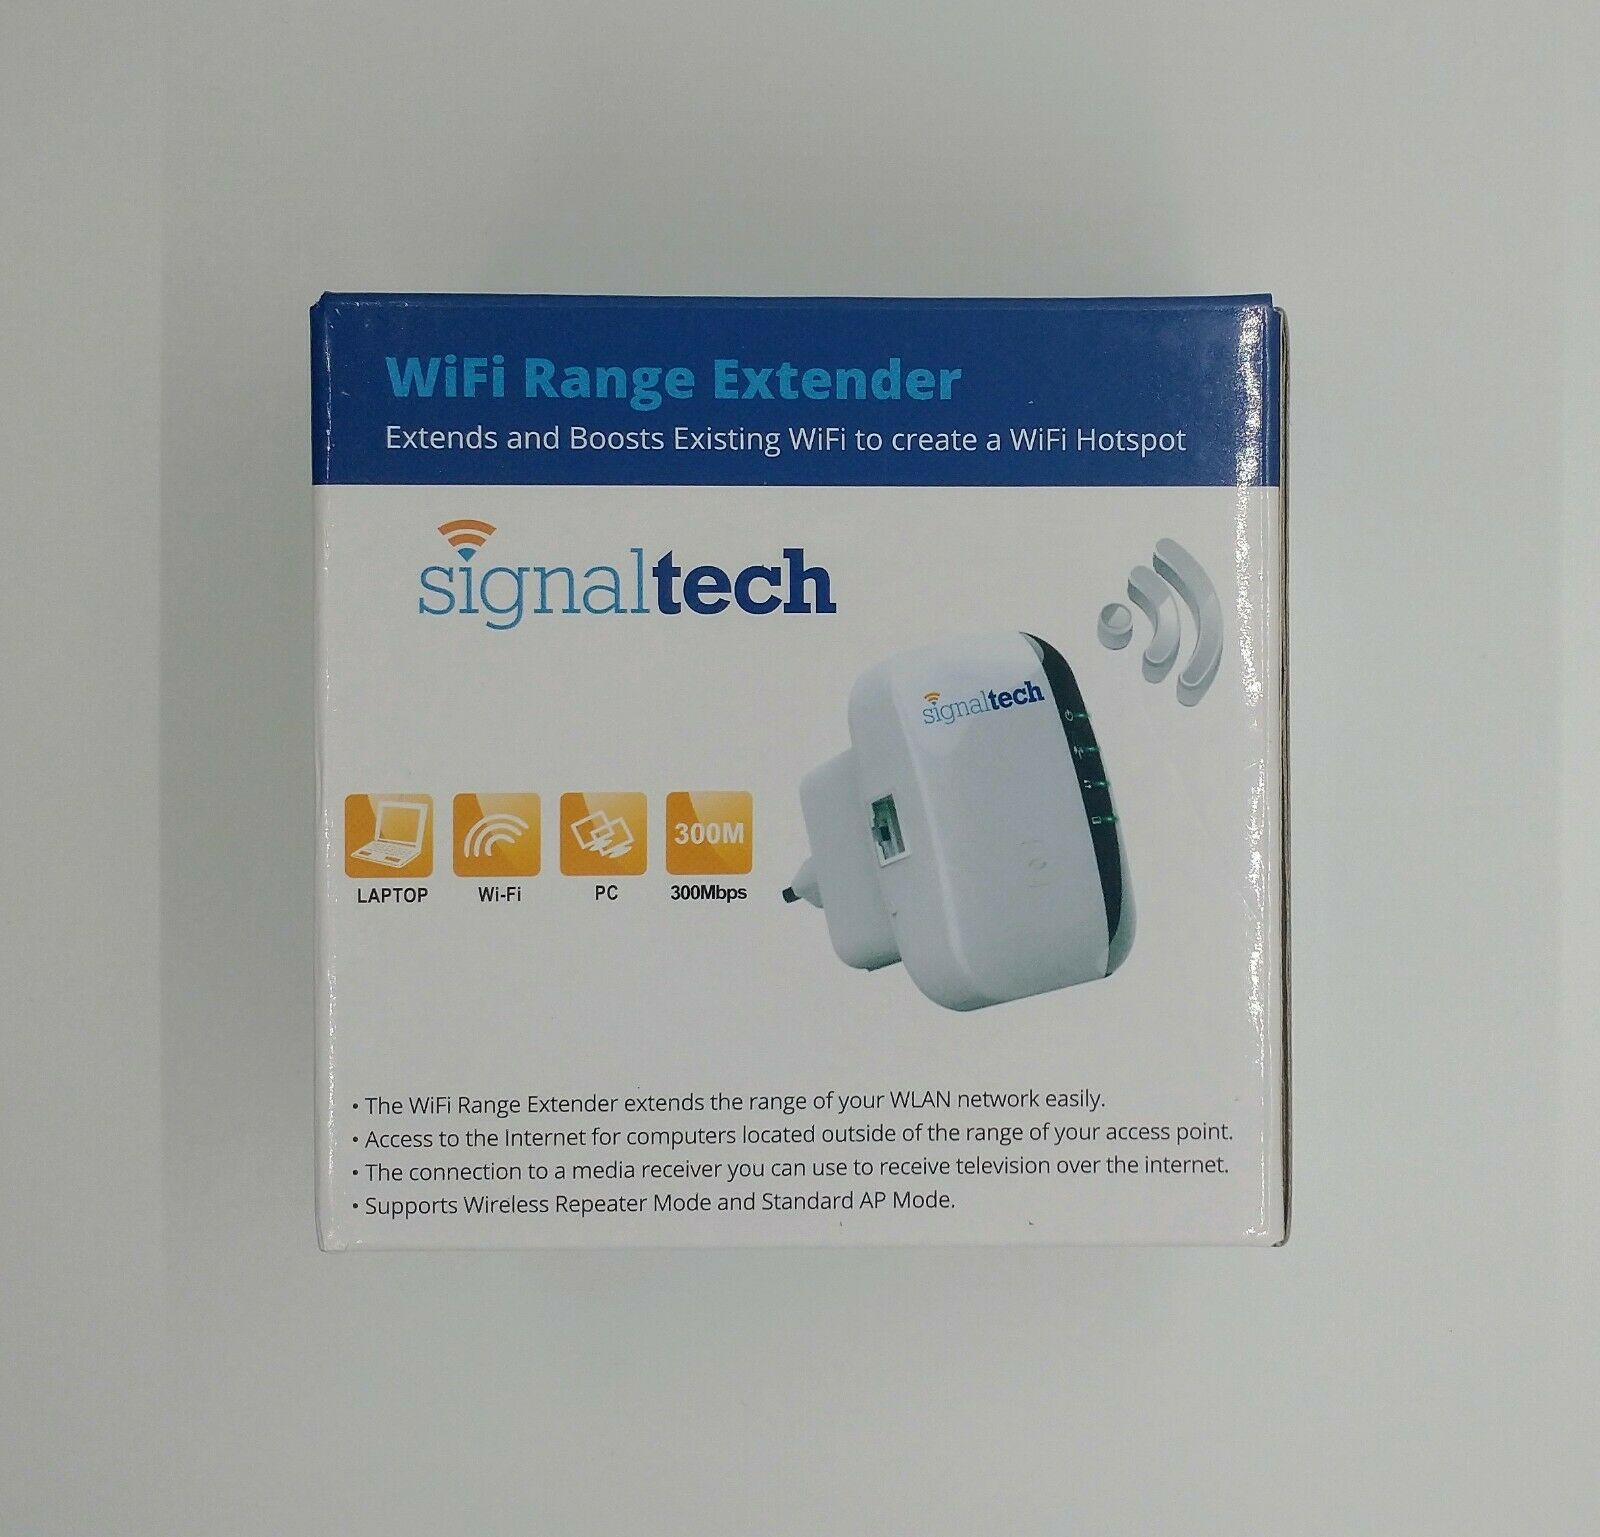 Signaltech Wifi Range Extender / Adapter - Boosts Existing WiFi - Hotspot